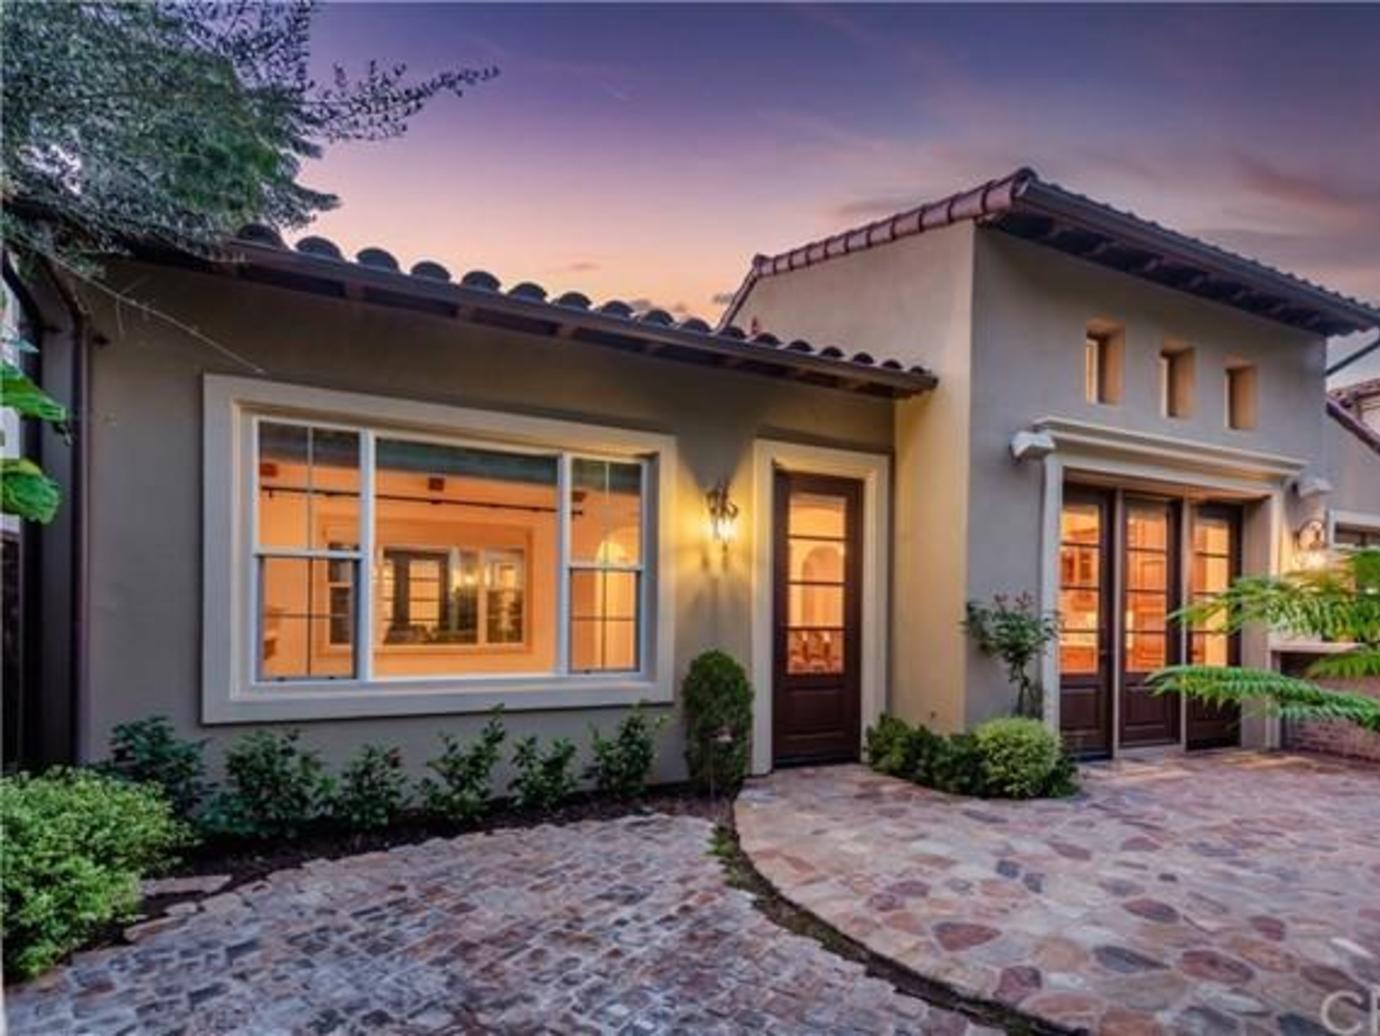 Kobe Bryant's Widow Vanessa Lists Tuscan-Style Southern California Home